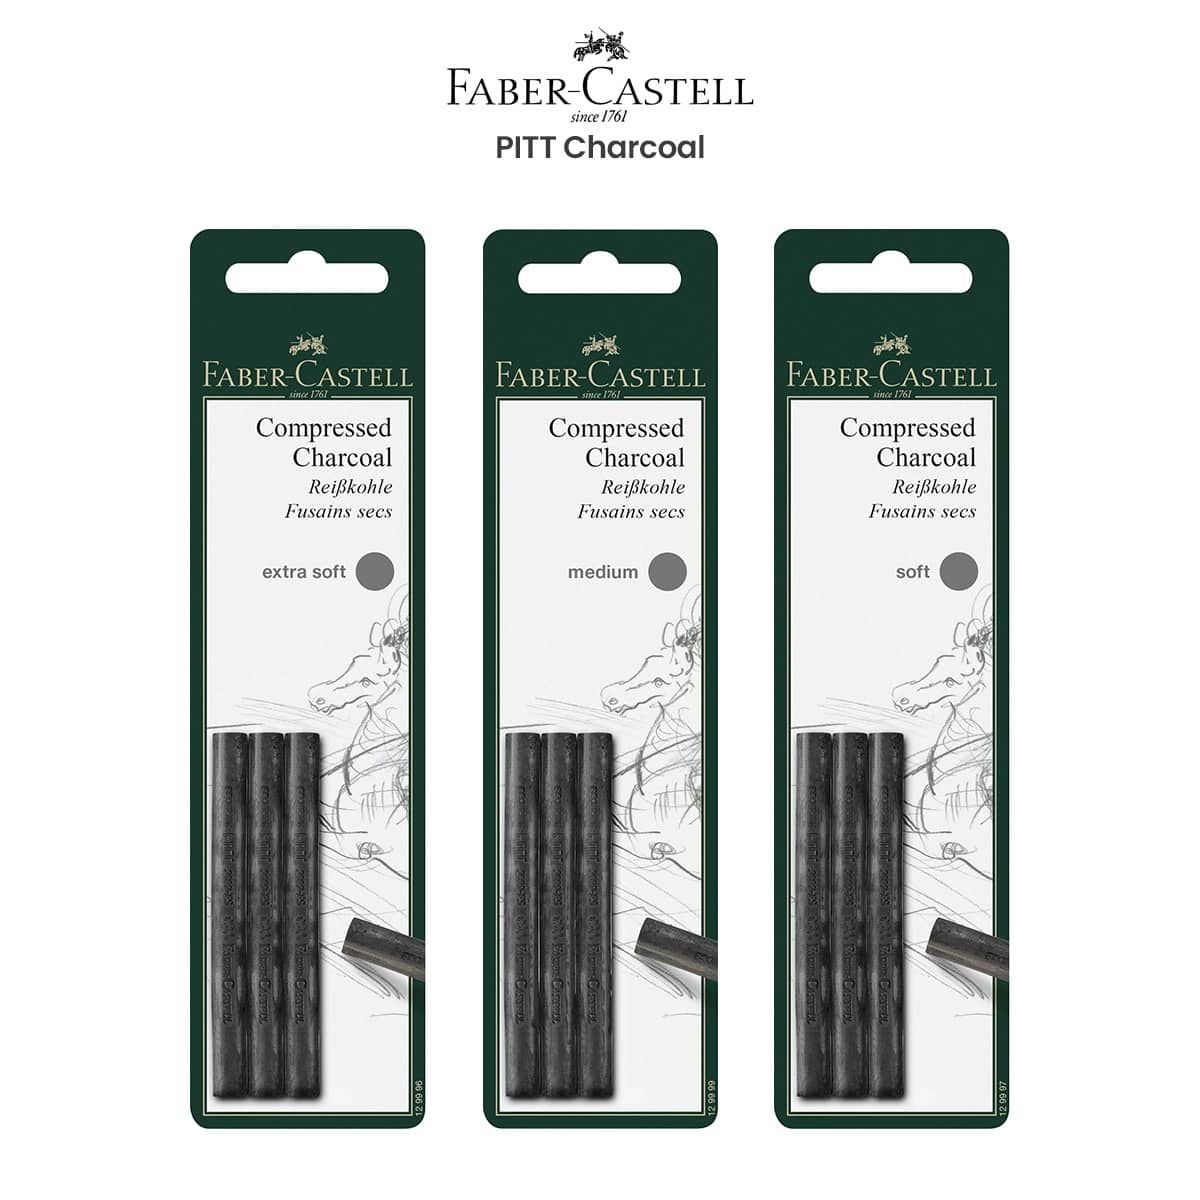 Faber-Castell Pitt 7-12mm Natural Charcoal Sticks Pack of 6 